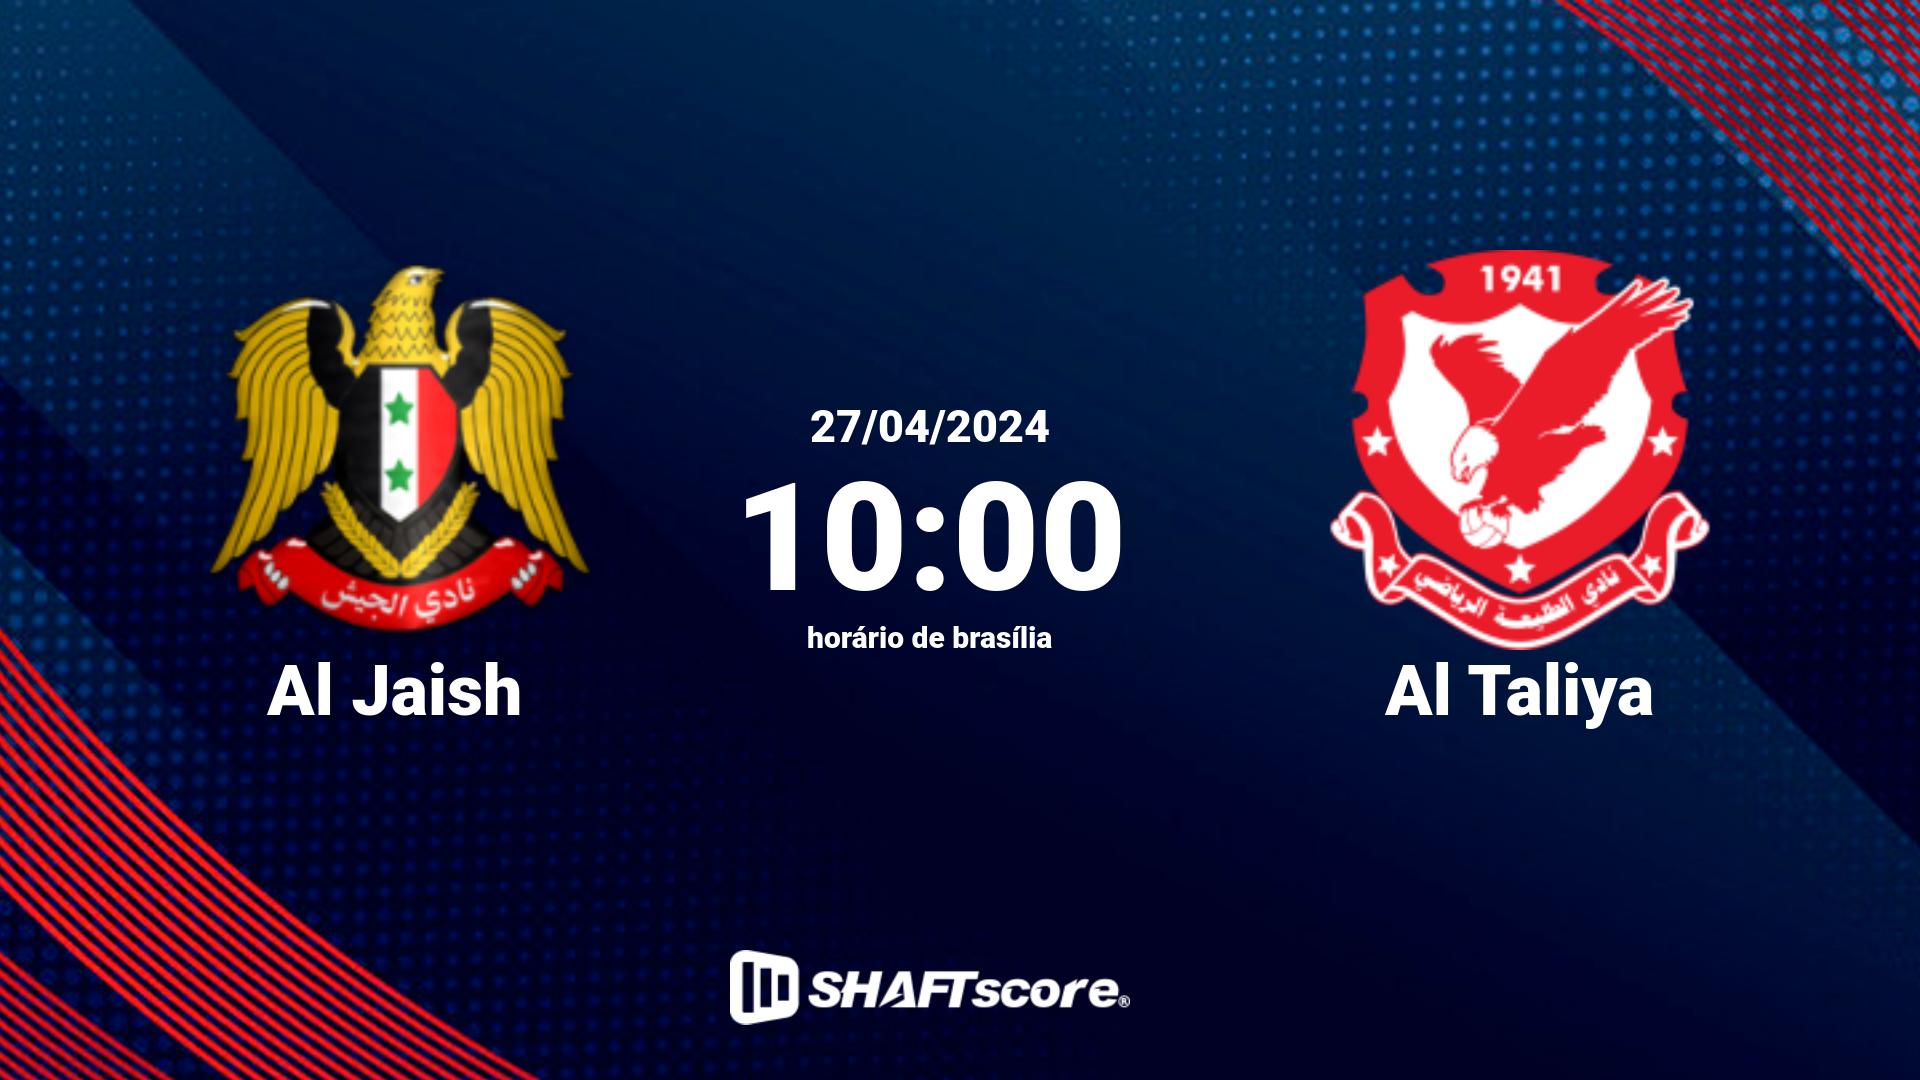 Estatísticas do jogo Al Jaish vs Al Taliya 27.04 10:00